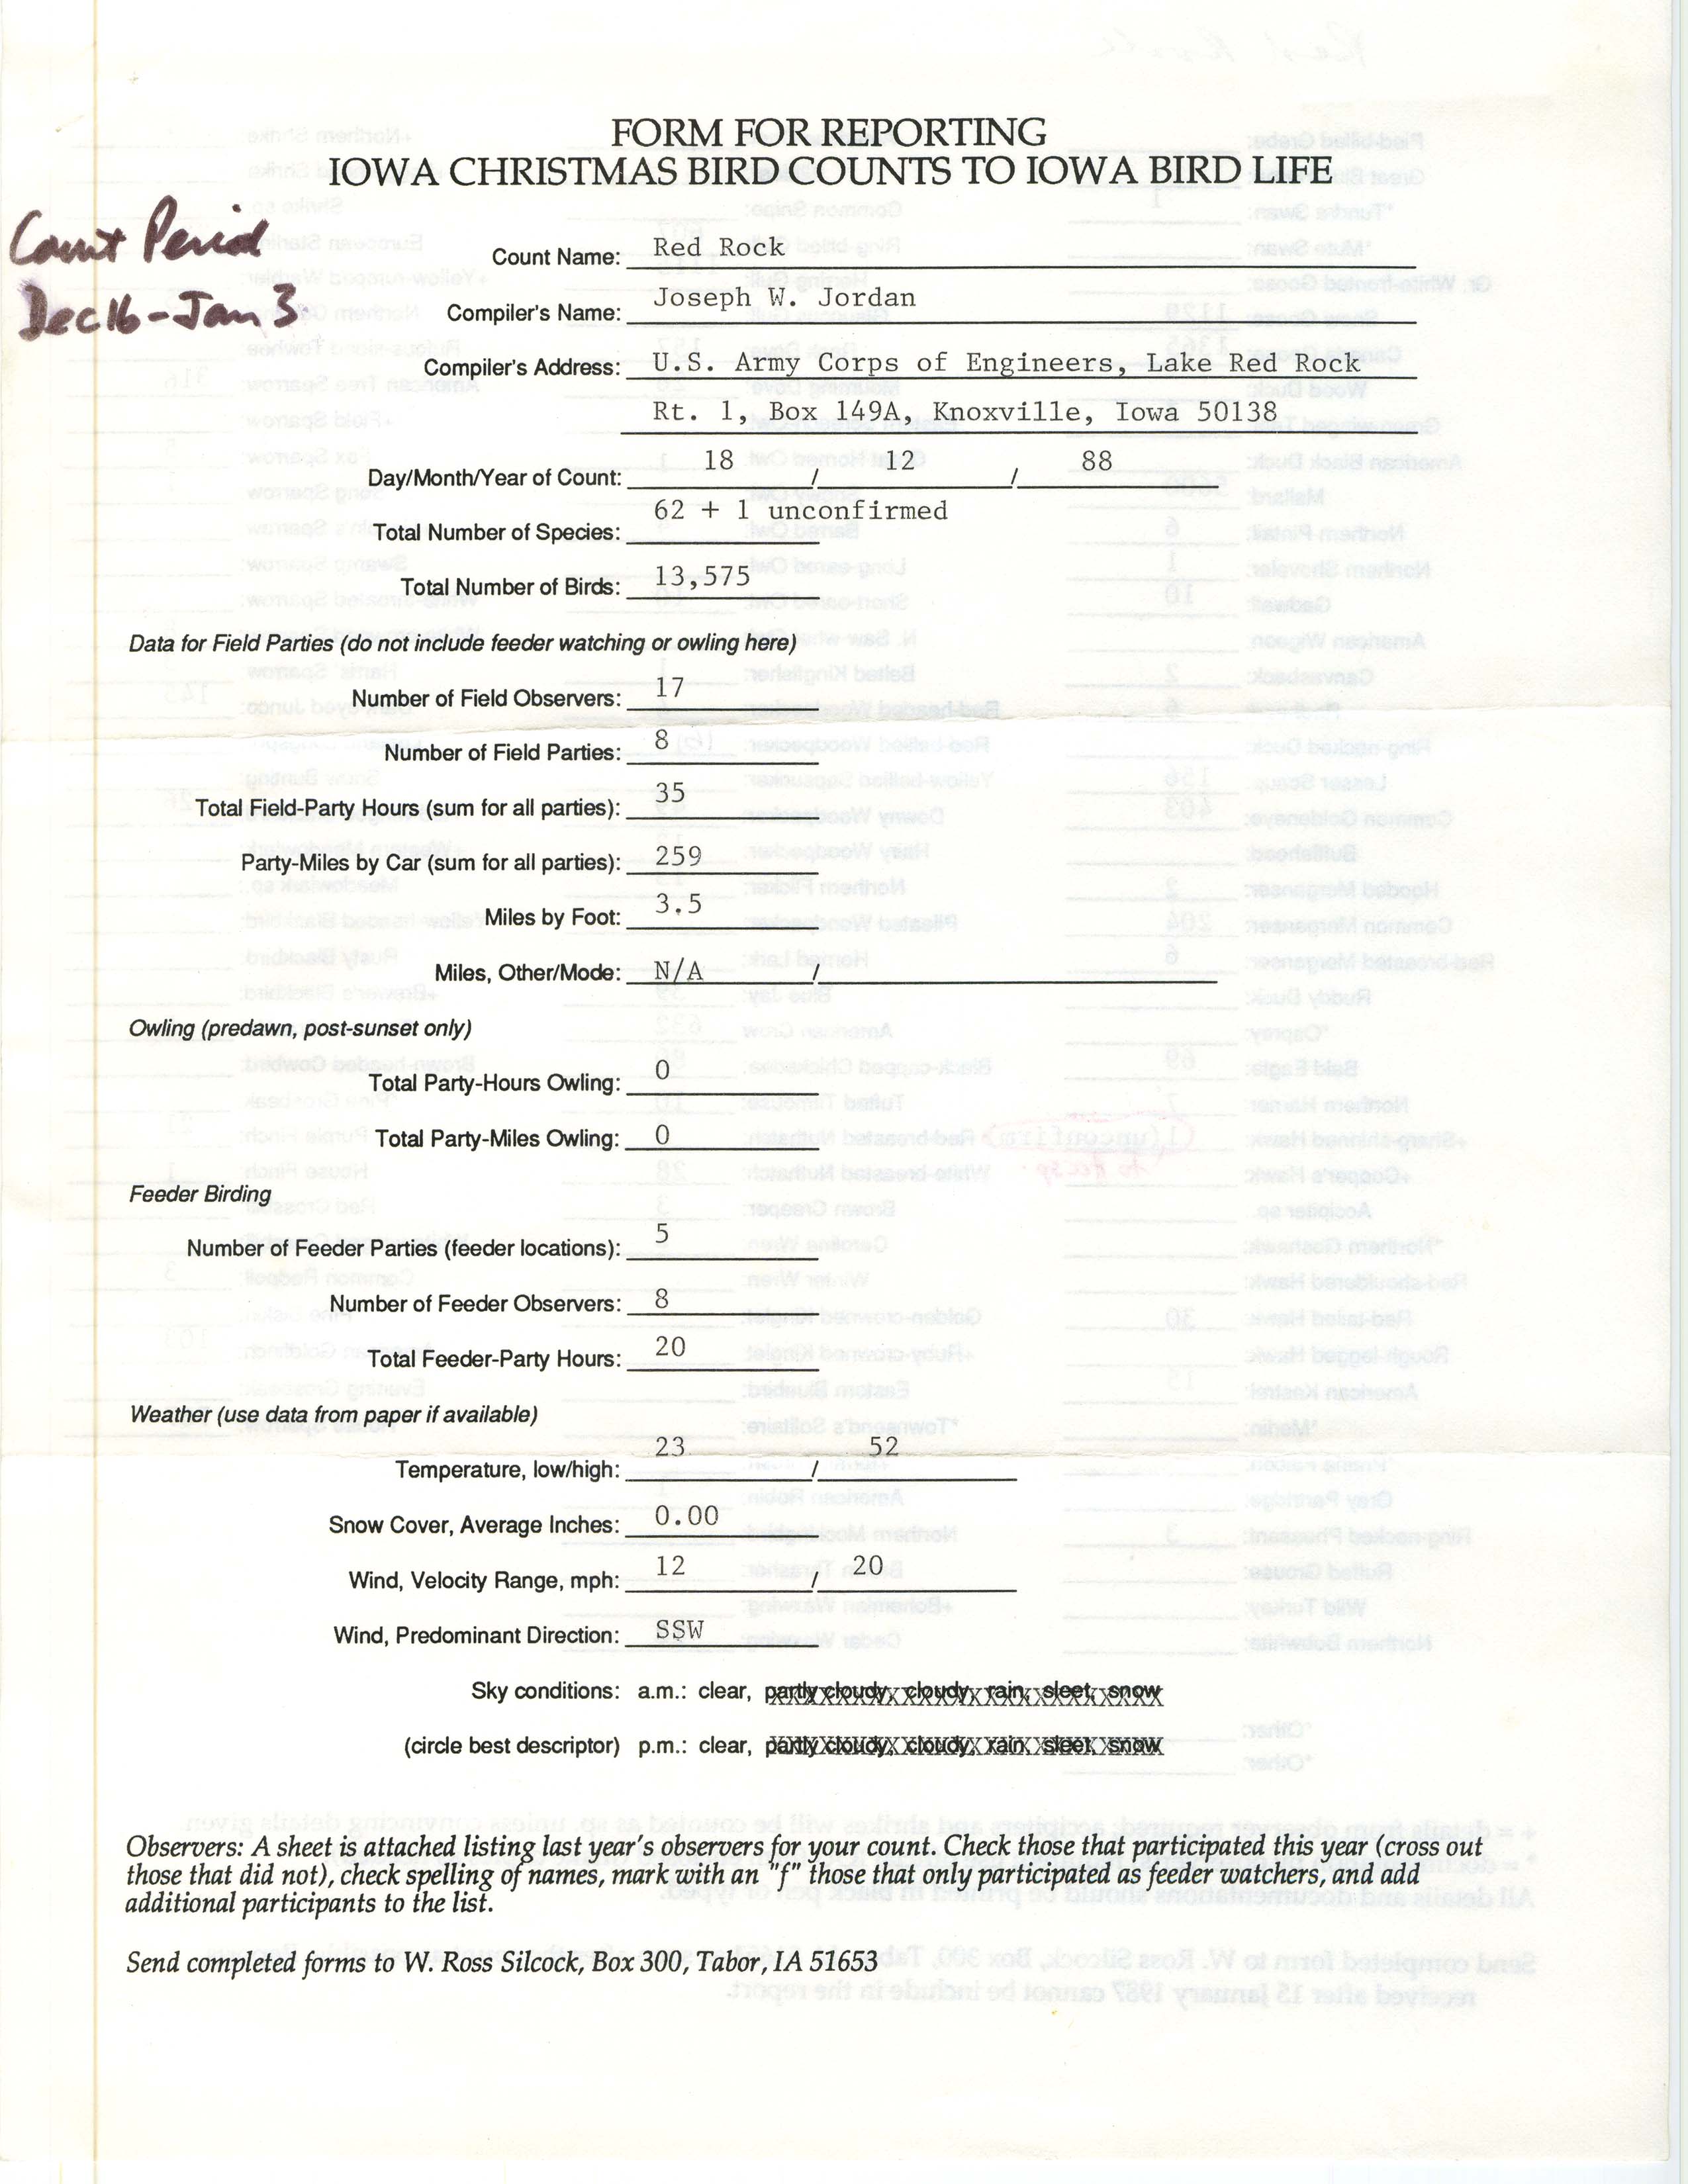 Form for reporting Iowa Christmas bird counts to Iowa Bird Life, Joseph W. Jordan, December 18, 1988